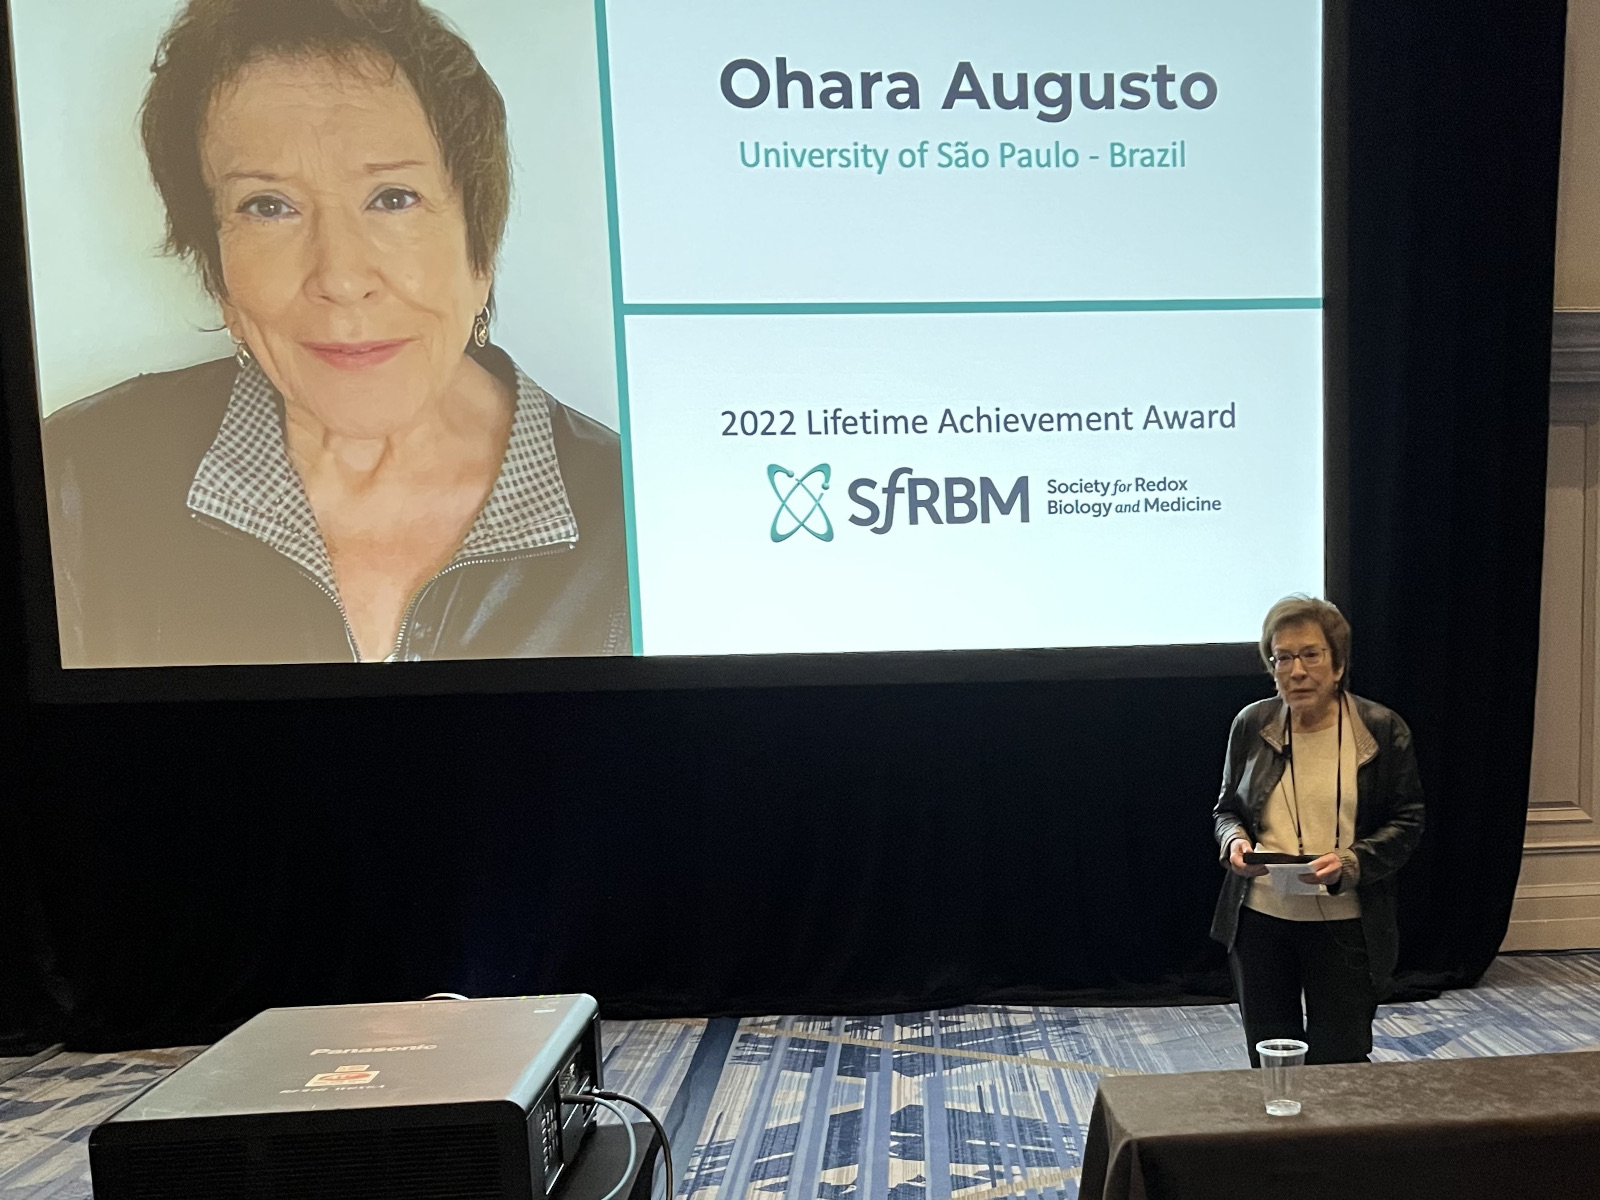  Ohara Augusto recebe o Lifetime Achievement Award 2022 da Society for Redox Biology and Medicine (SfRBM)